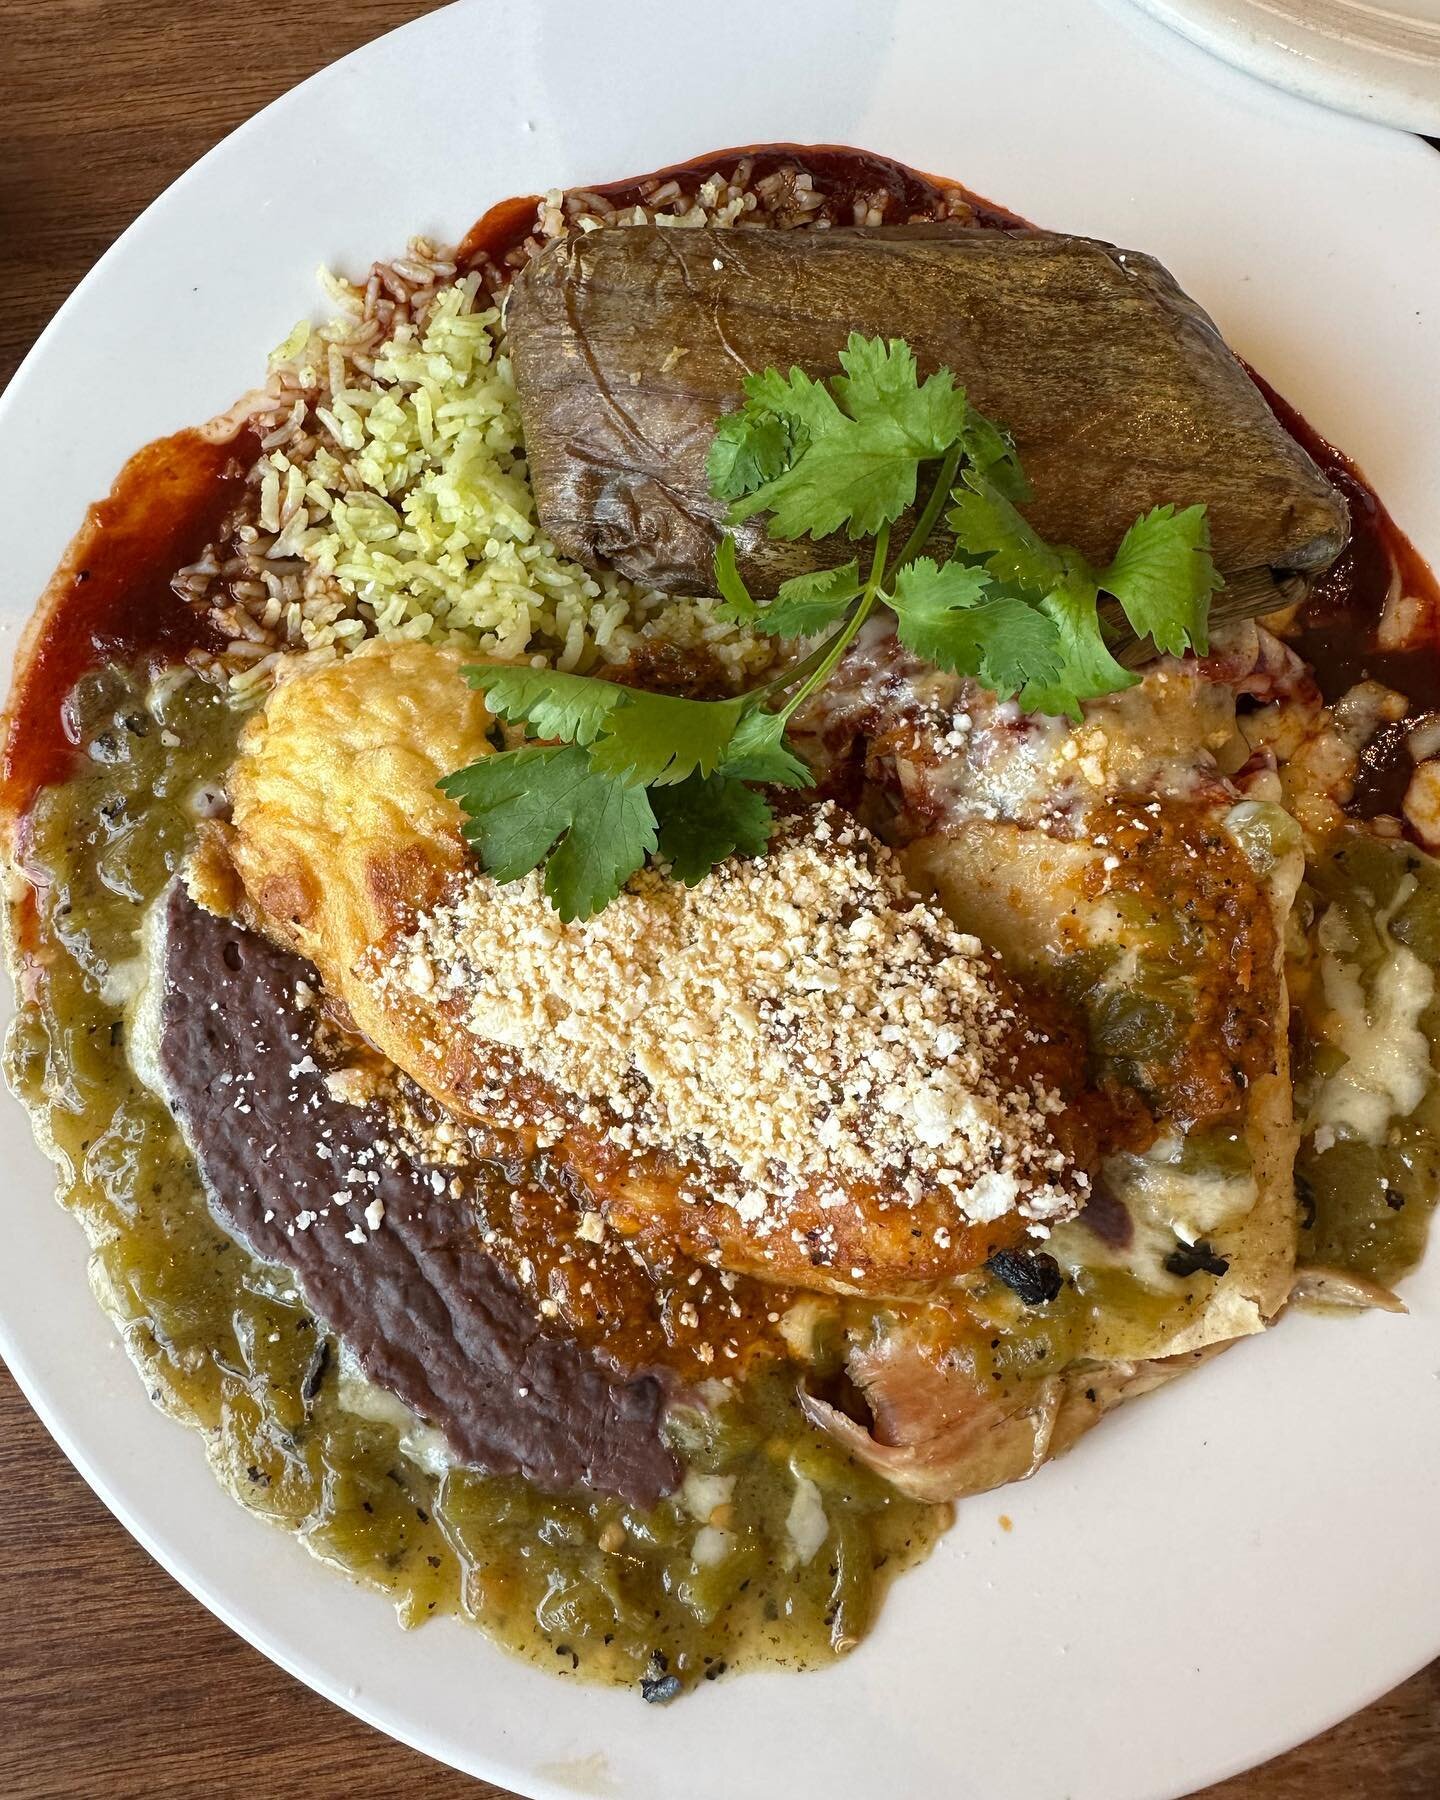 New Mexico! Green chili everything 💚#newnexico #santafe #greenchili #tamales #enchiladas @cafe_pasquals